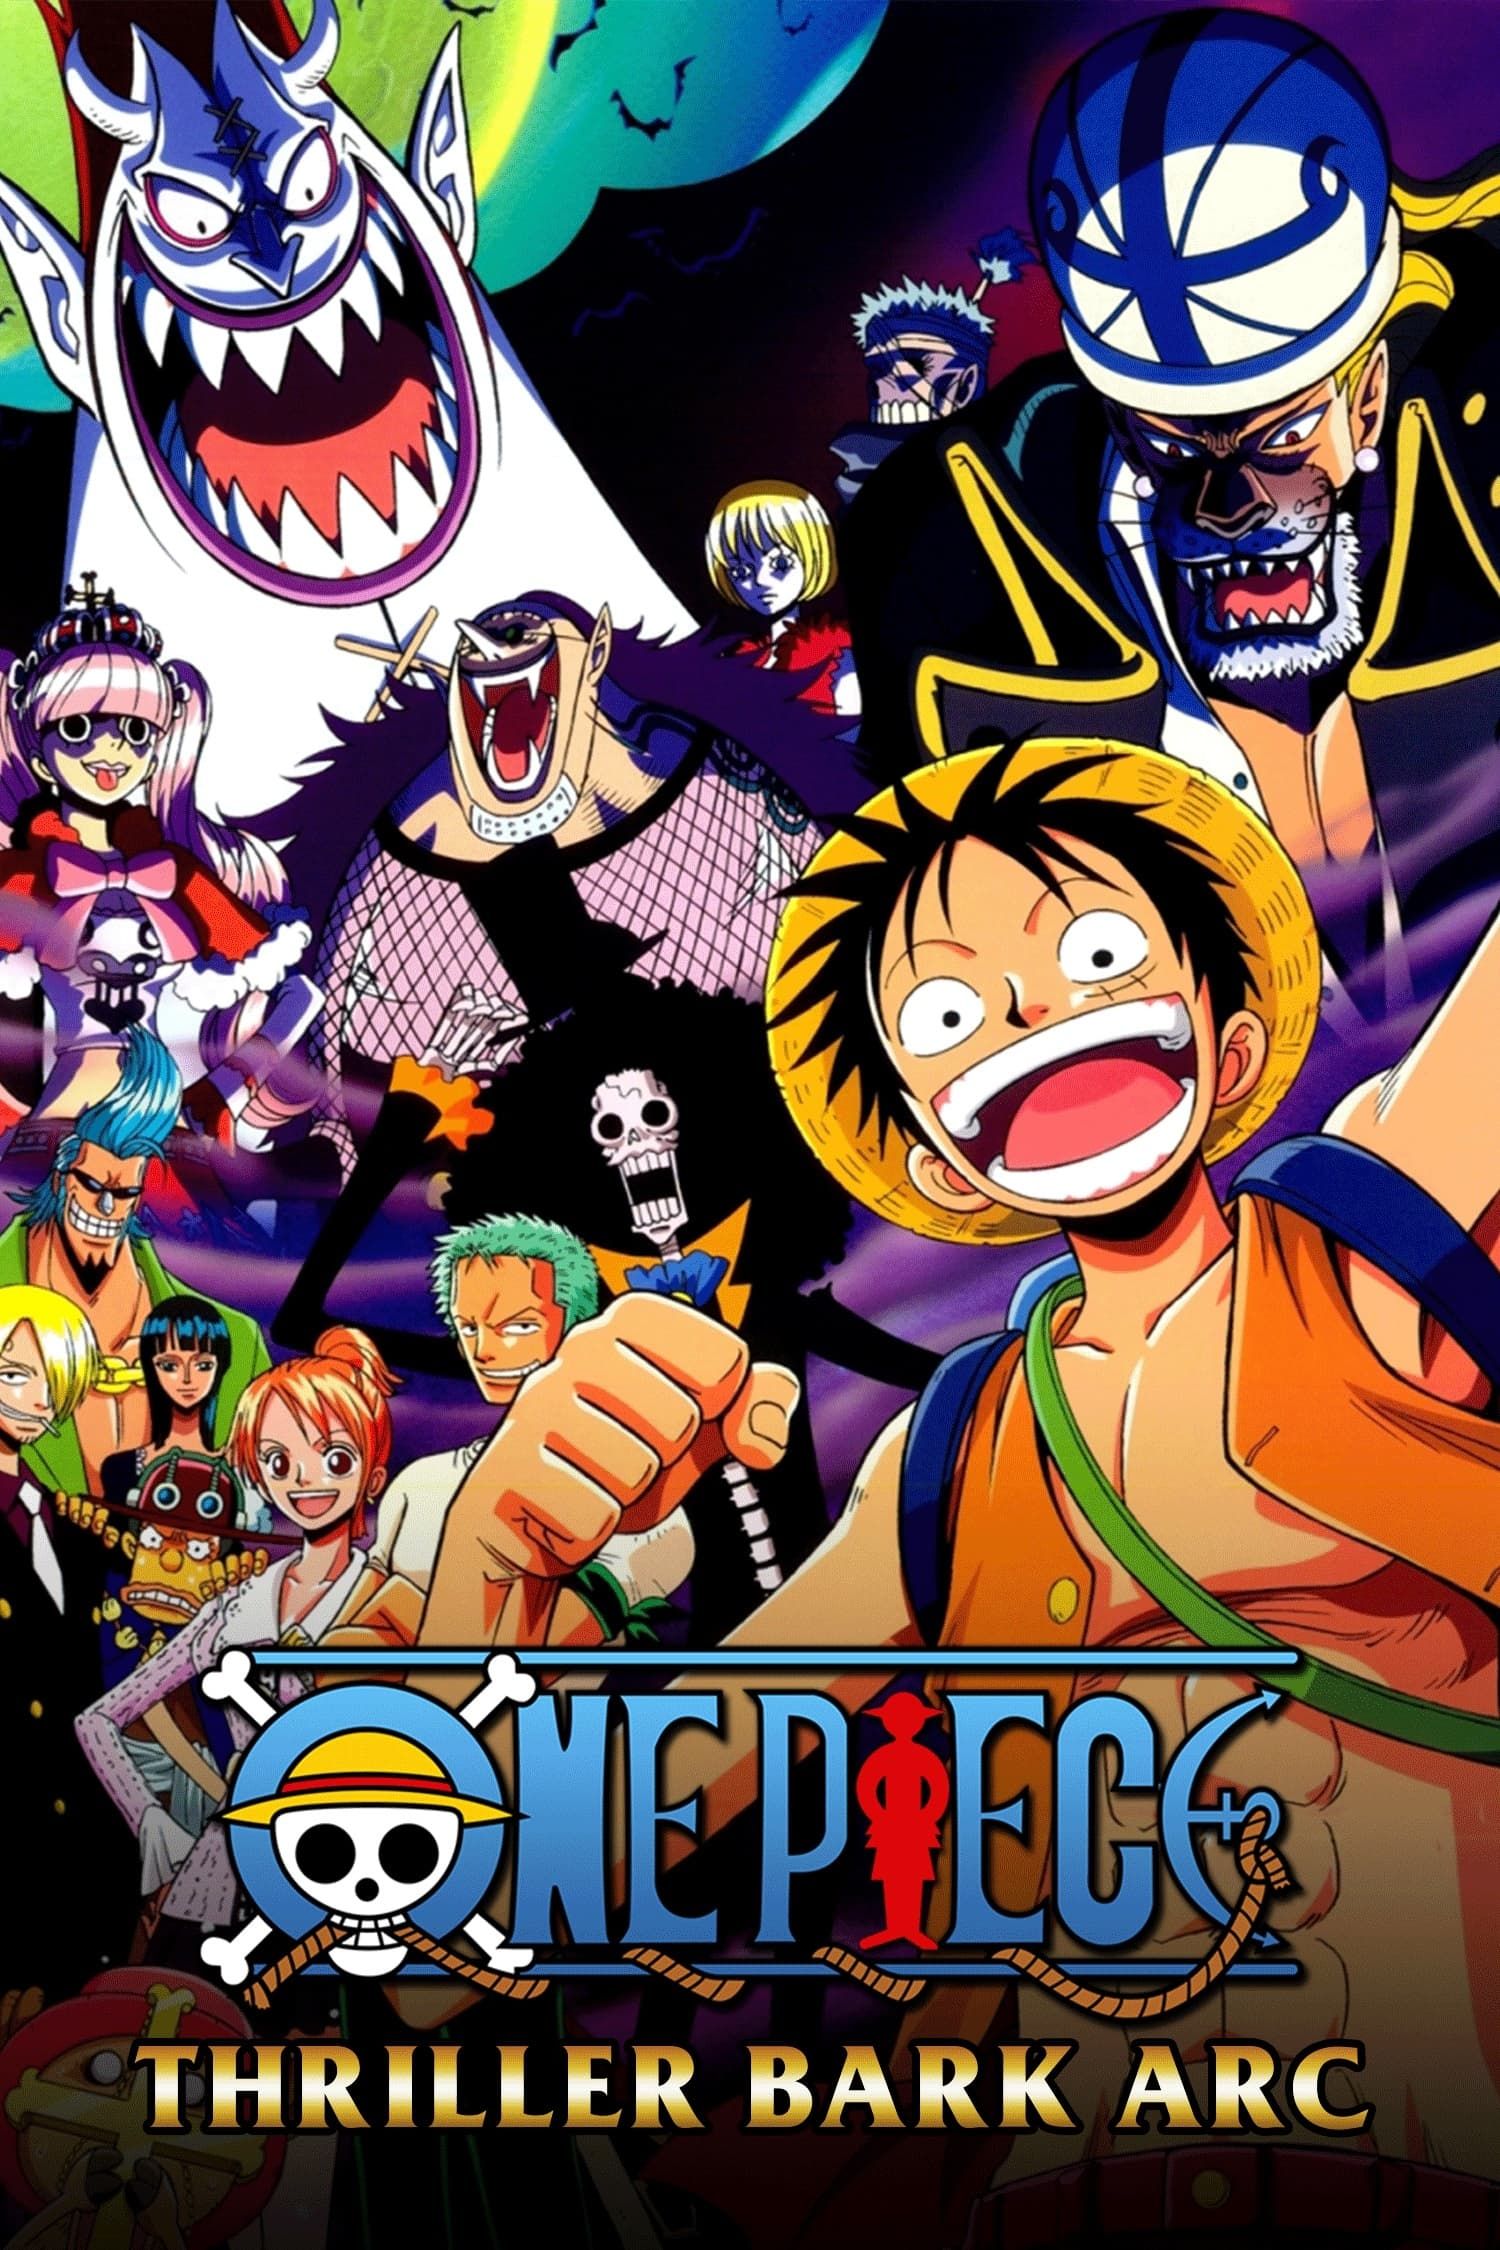 One Piece: Episode of Skypiea Anime Special Reveals Staff, Guest